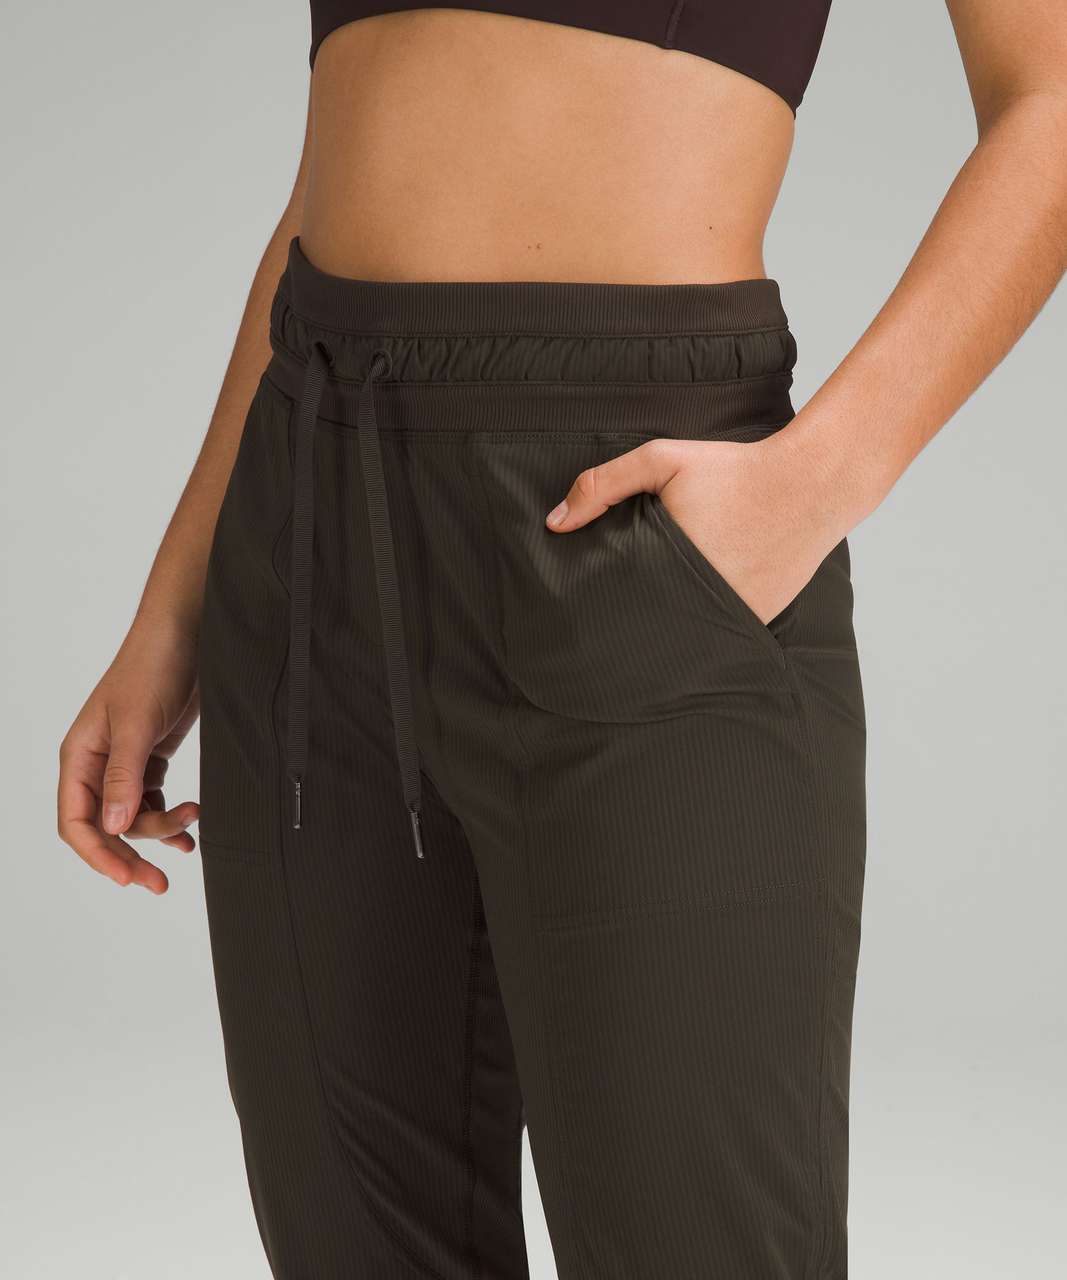 Dance studio shorts (java, size 2) - in alignment bra (pink peony